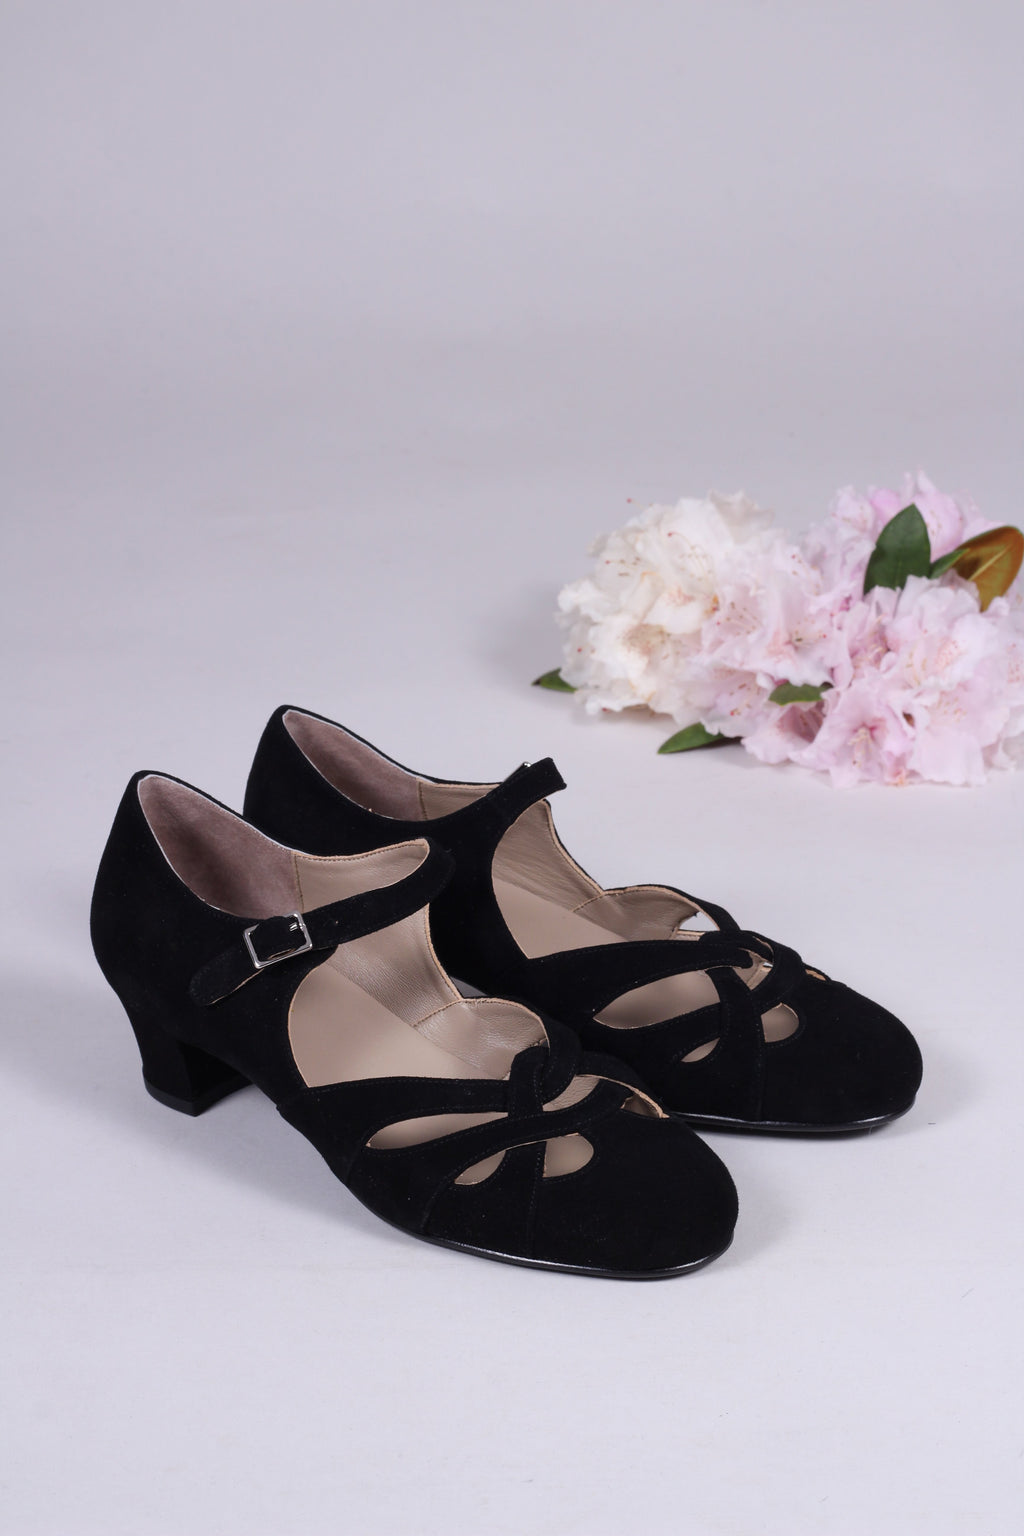 Dance shoes soles. Perfect for lindy hop swing dancin – memery